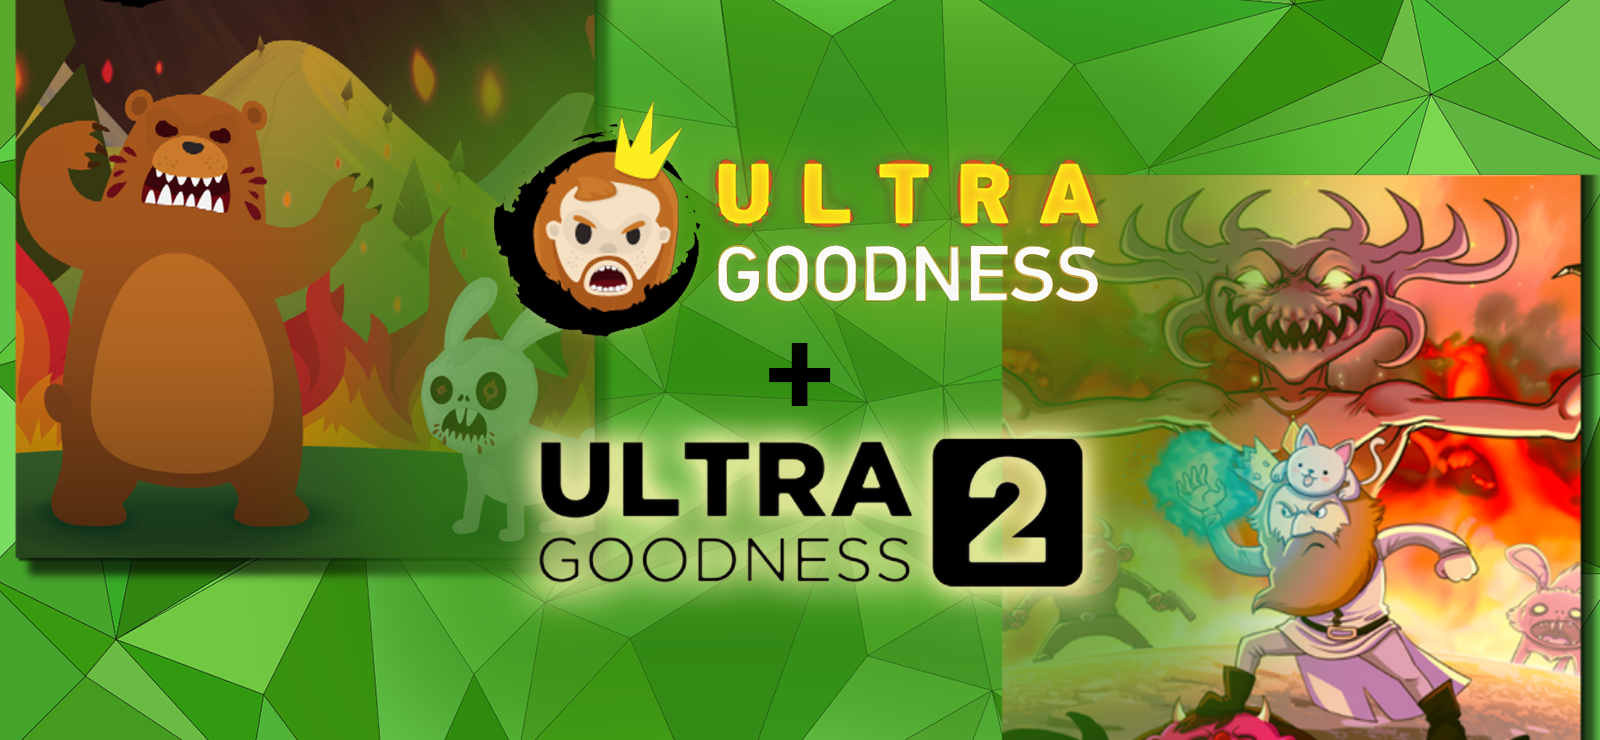 UltraGoodness Franchise Bundle